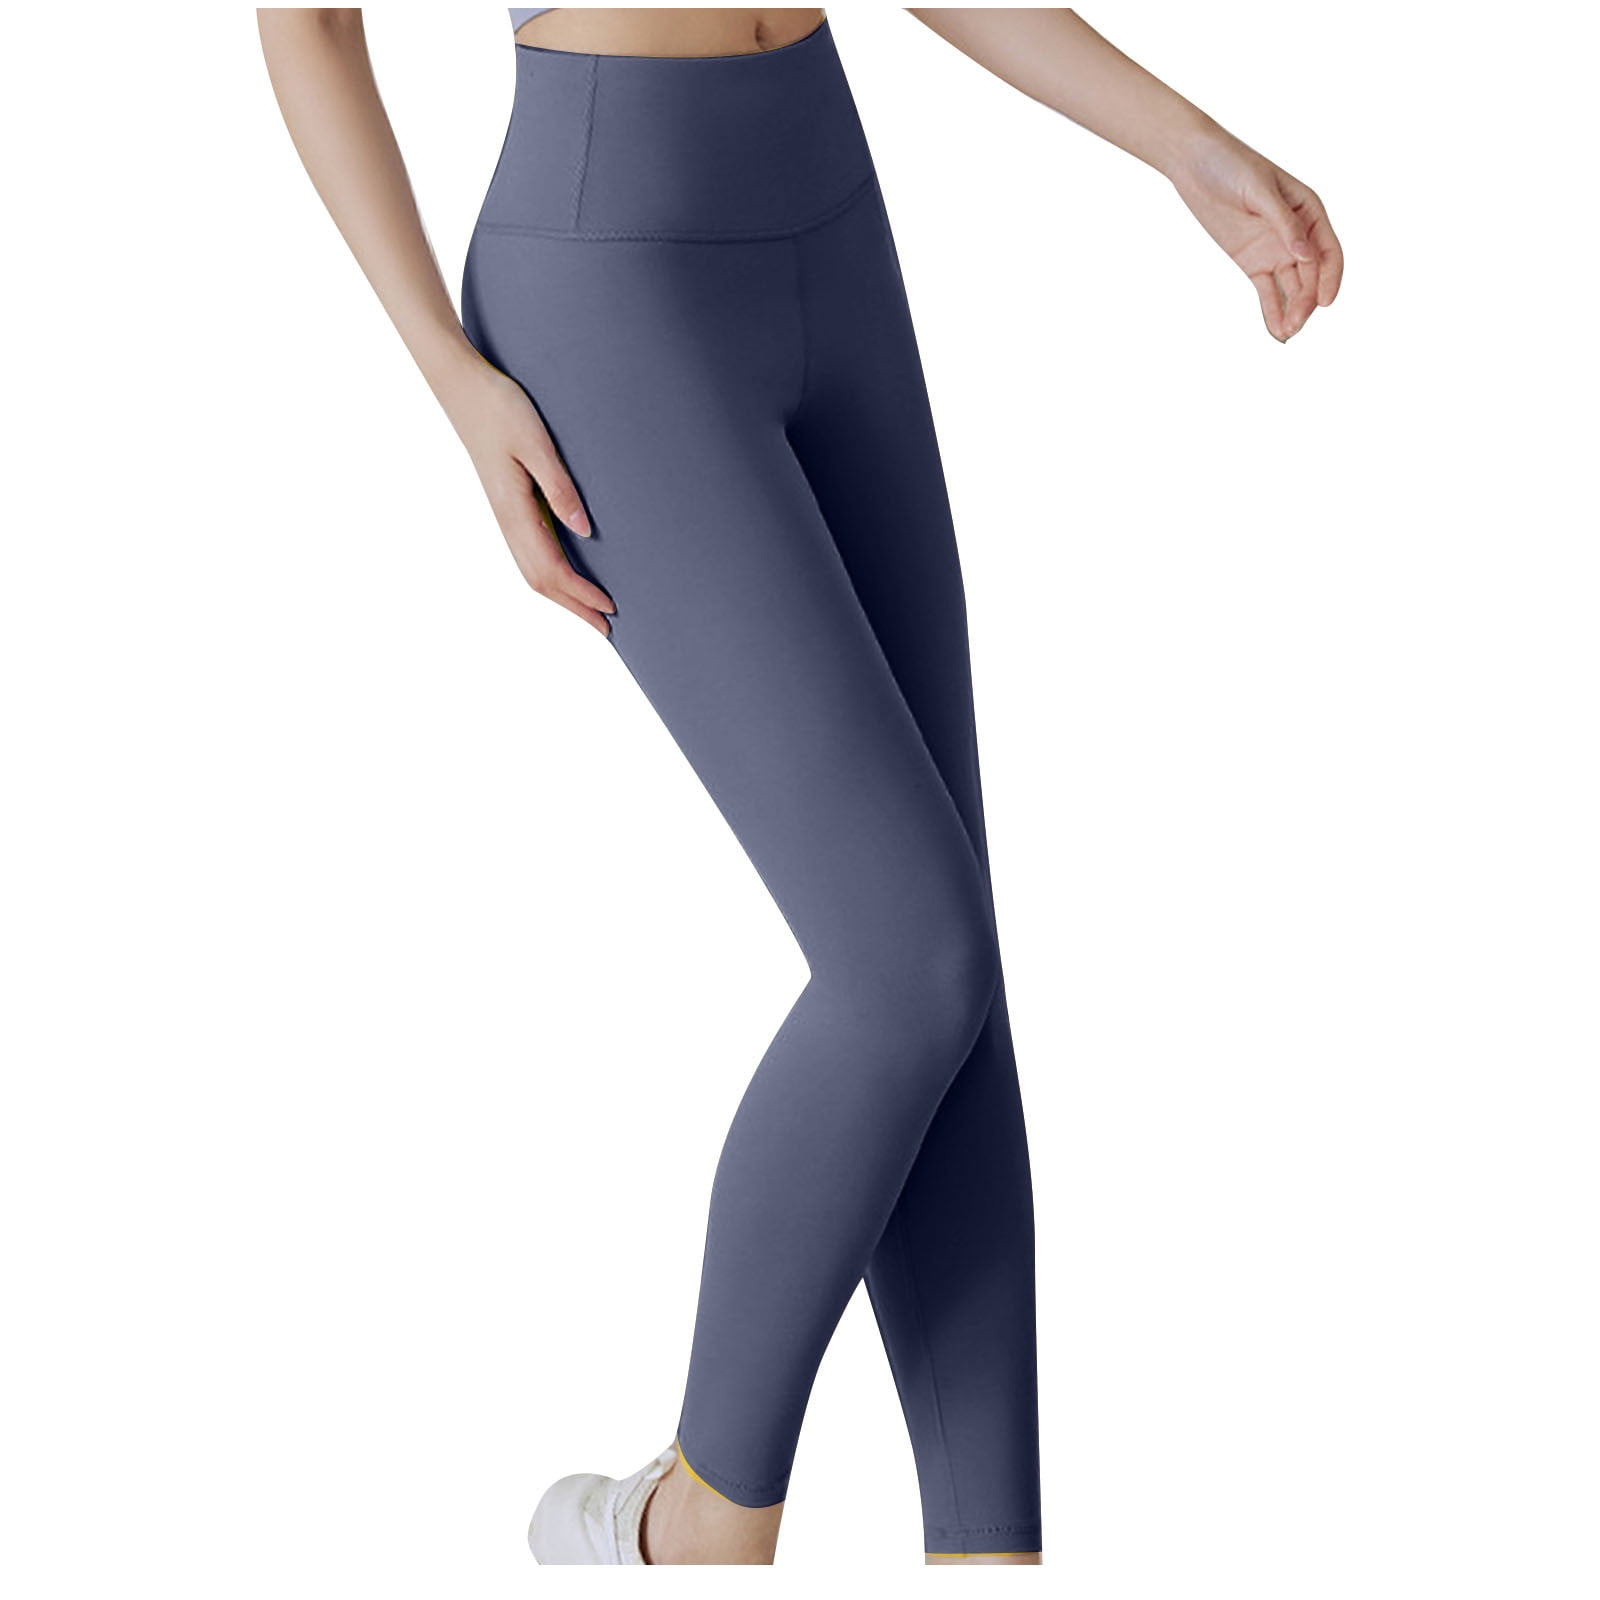 FAIWAD Short Leggings for Women High Waist Stretch Yoga Pants Butt Lift  Workout Joggers Trousers with Pockets (Medium, Blue) 